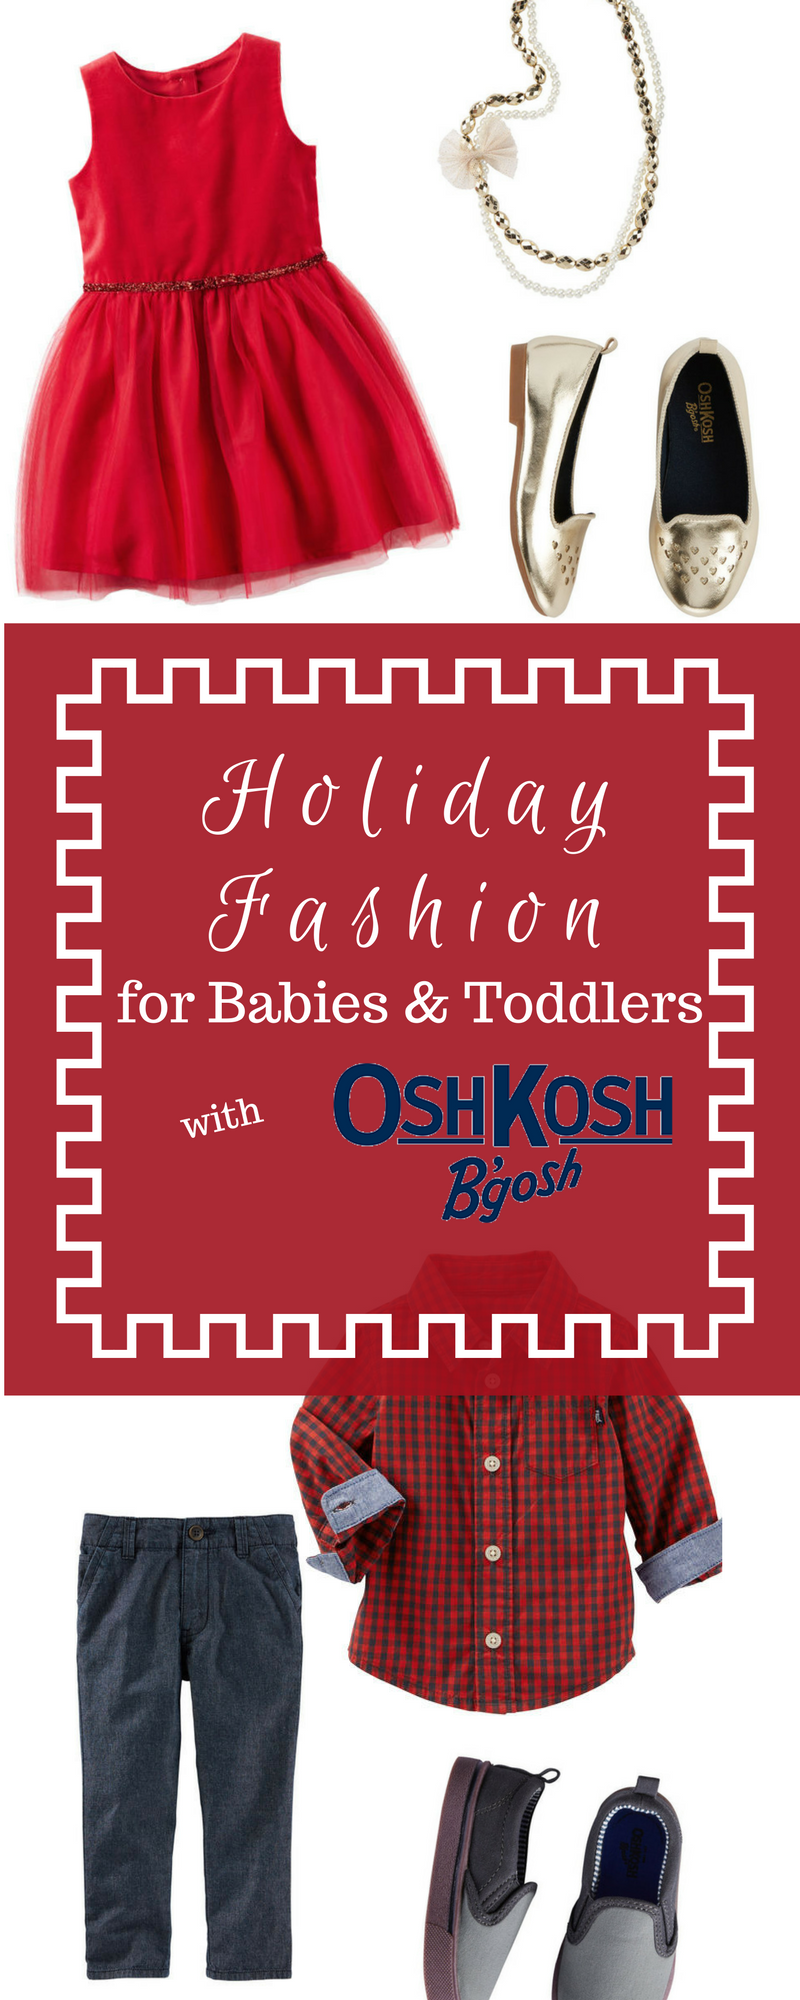 Holiday Fashion for Babies and Kids by OshKosh B'gosh